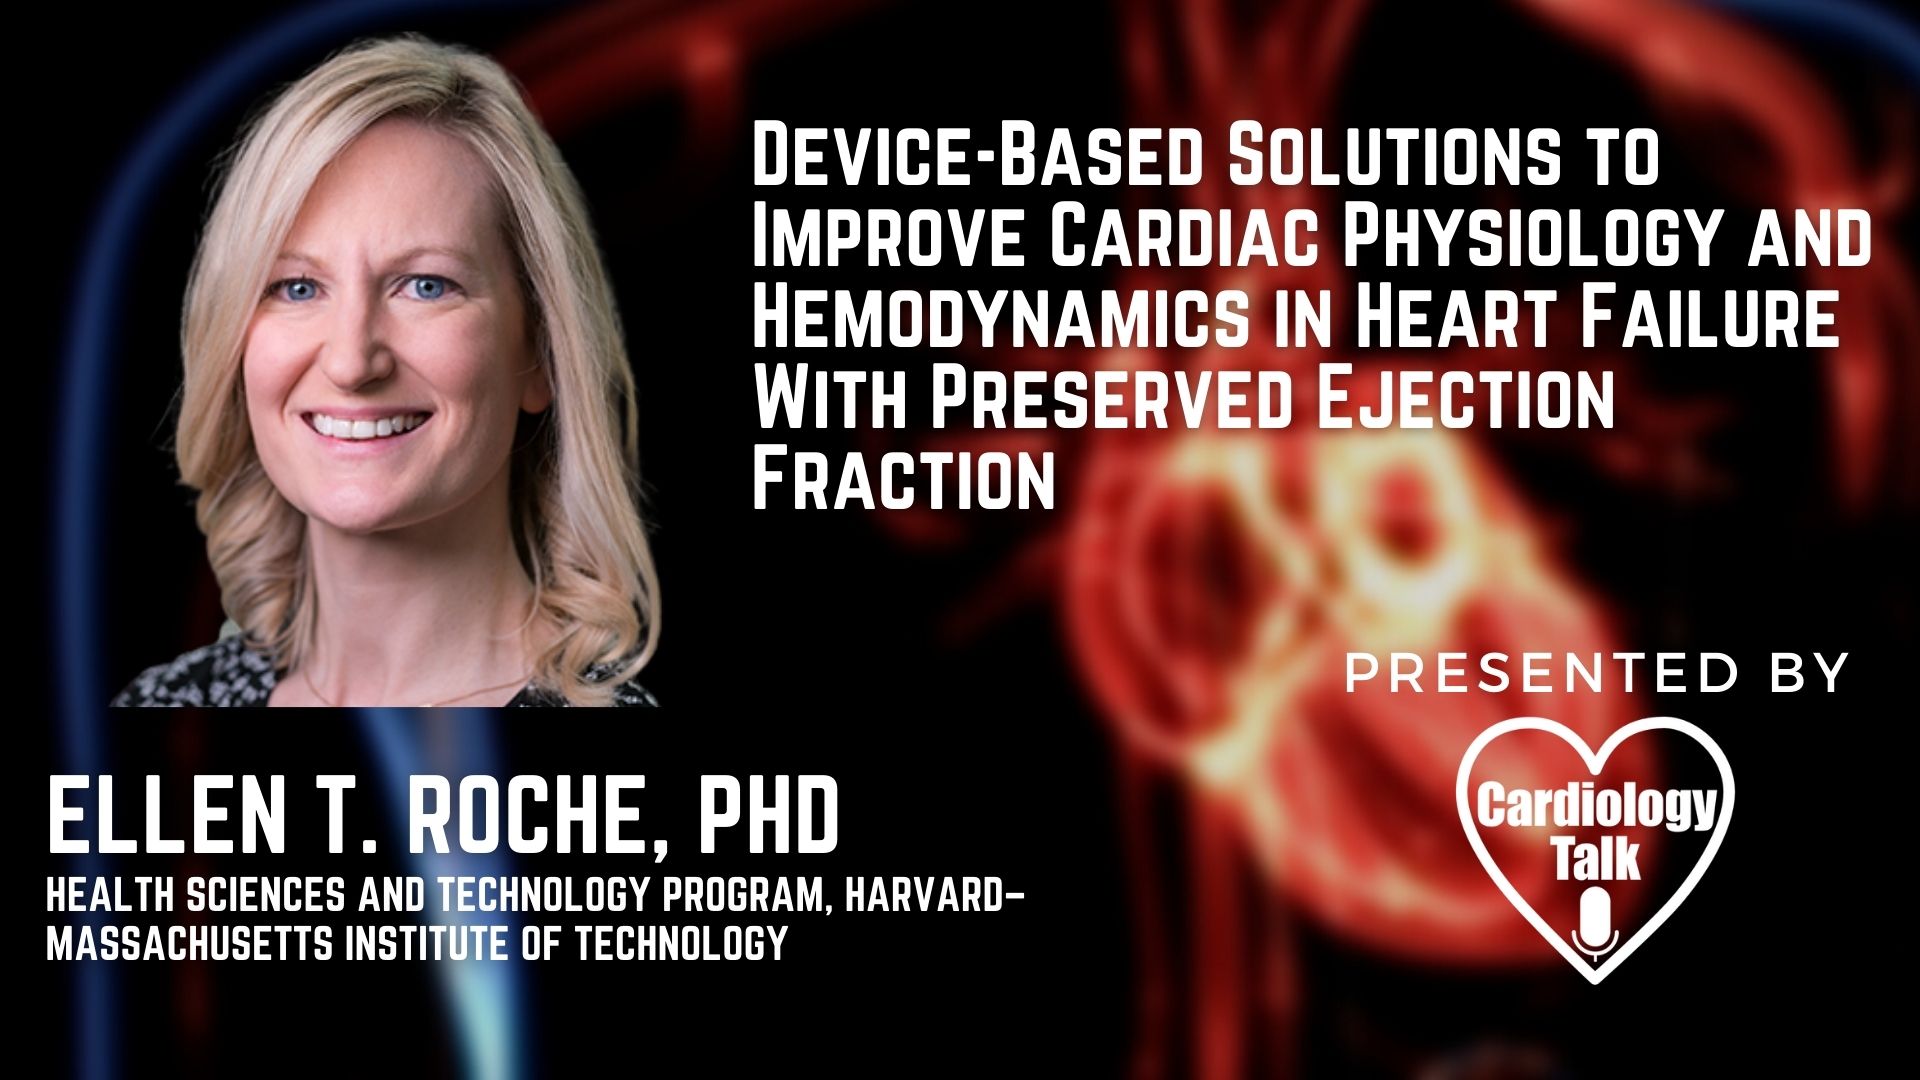 Ellen T. Roche, PHD- #MIT #massachusettsinstituteoftechnology # CardiacPhysiology #Hemodynamics #HeartFailure #Cardiology #Research